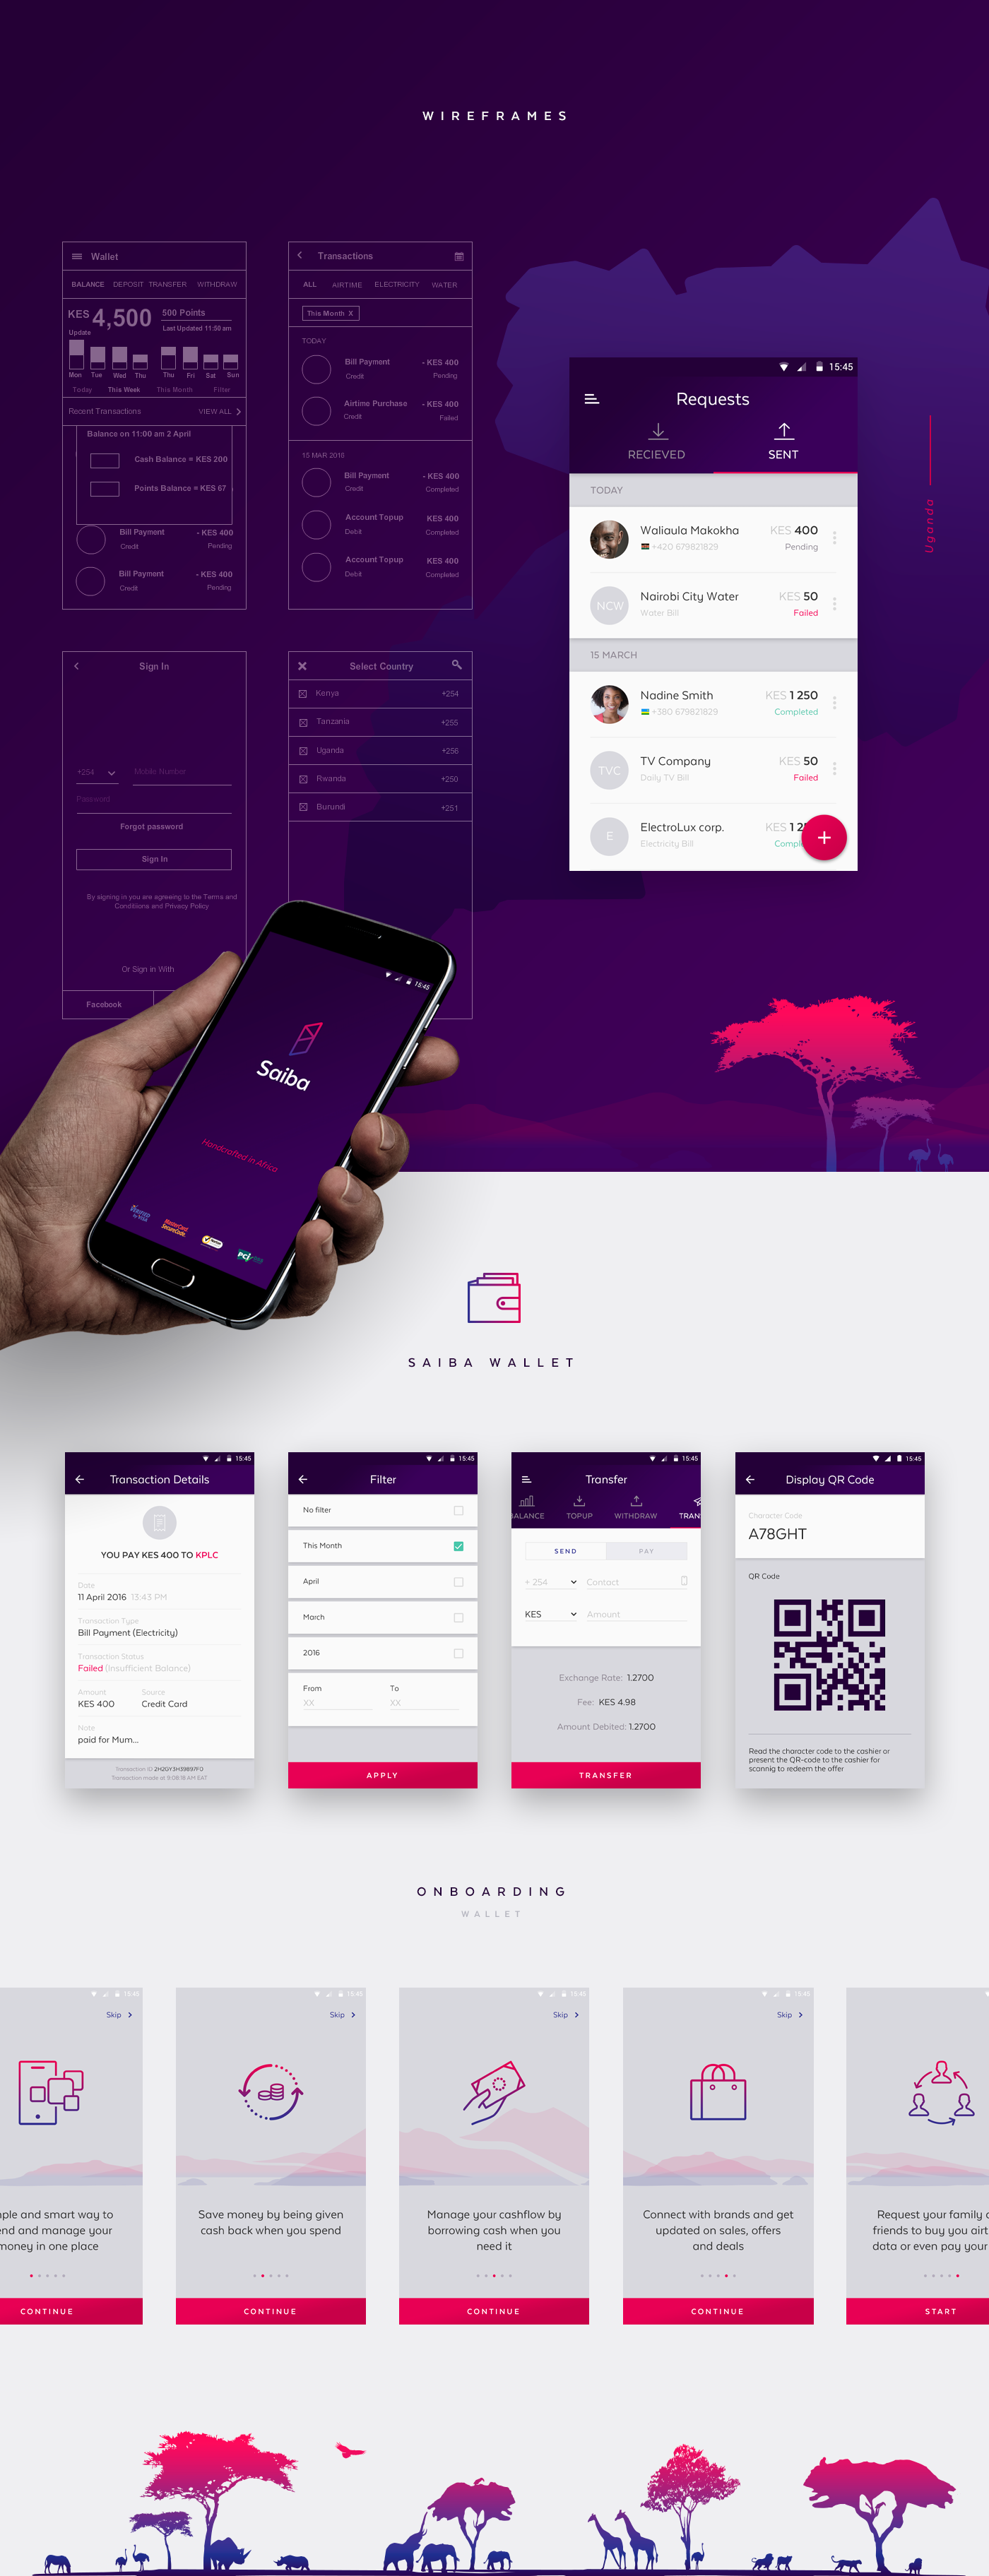 saiba app mobile africa kenya money Smart WALLET Responsive